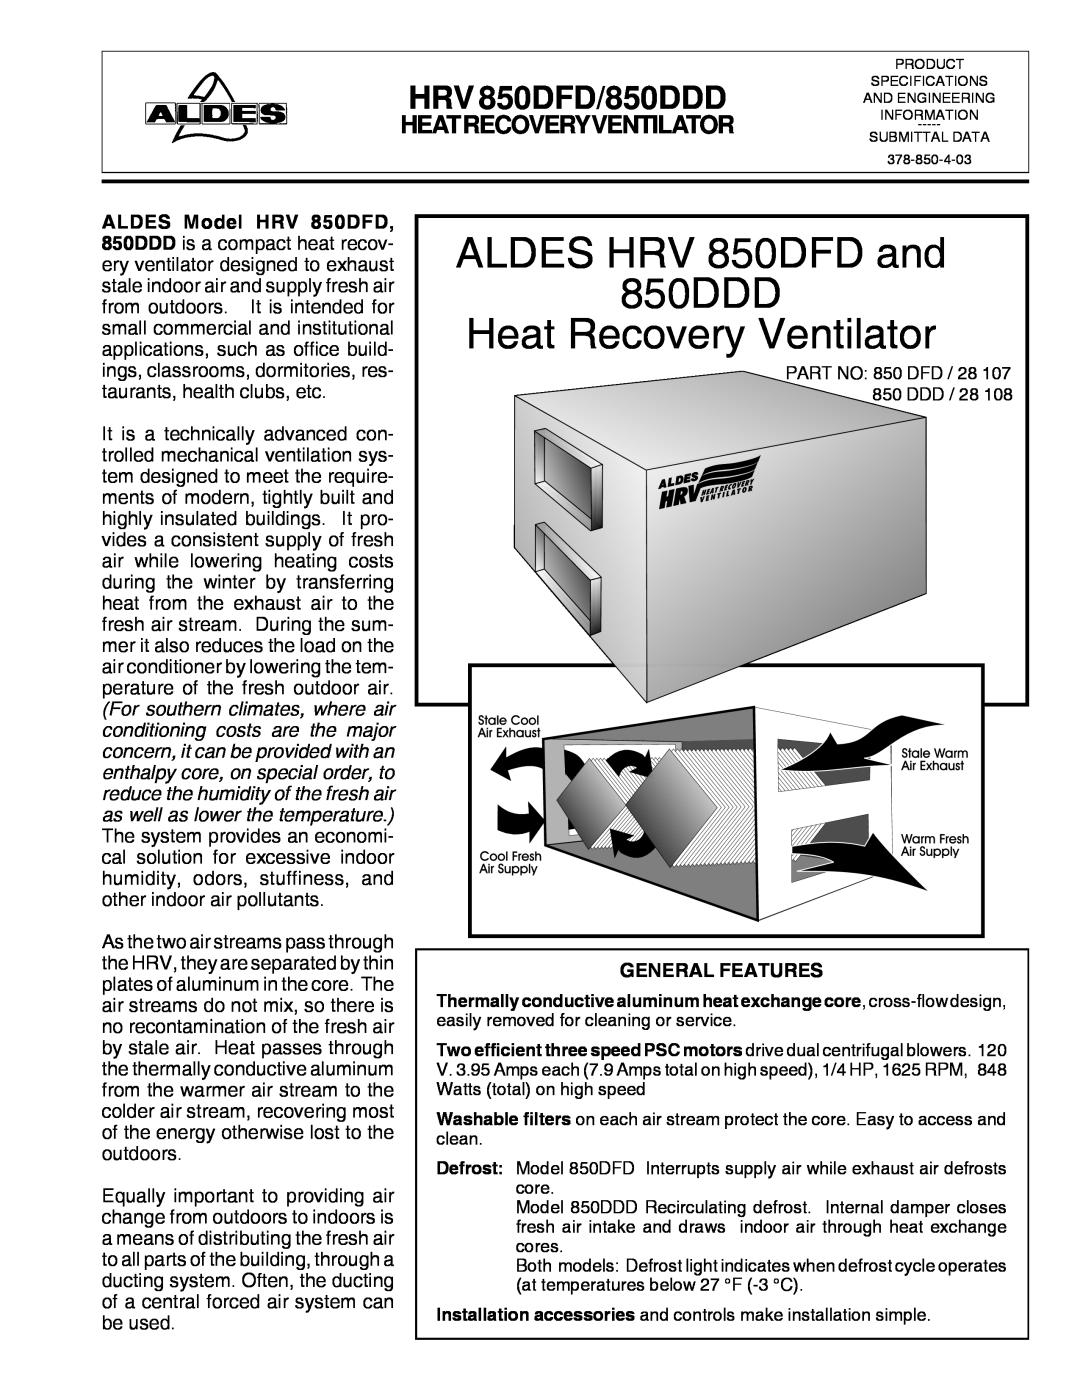 American Aldes HRV 700SDD ALDES HRV 850DFD and, HRV 850DFD/850DDD, Heatrecoveryventilator, Heat Recovery Ventilator 